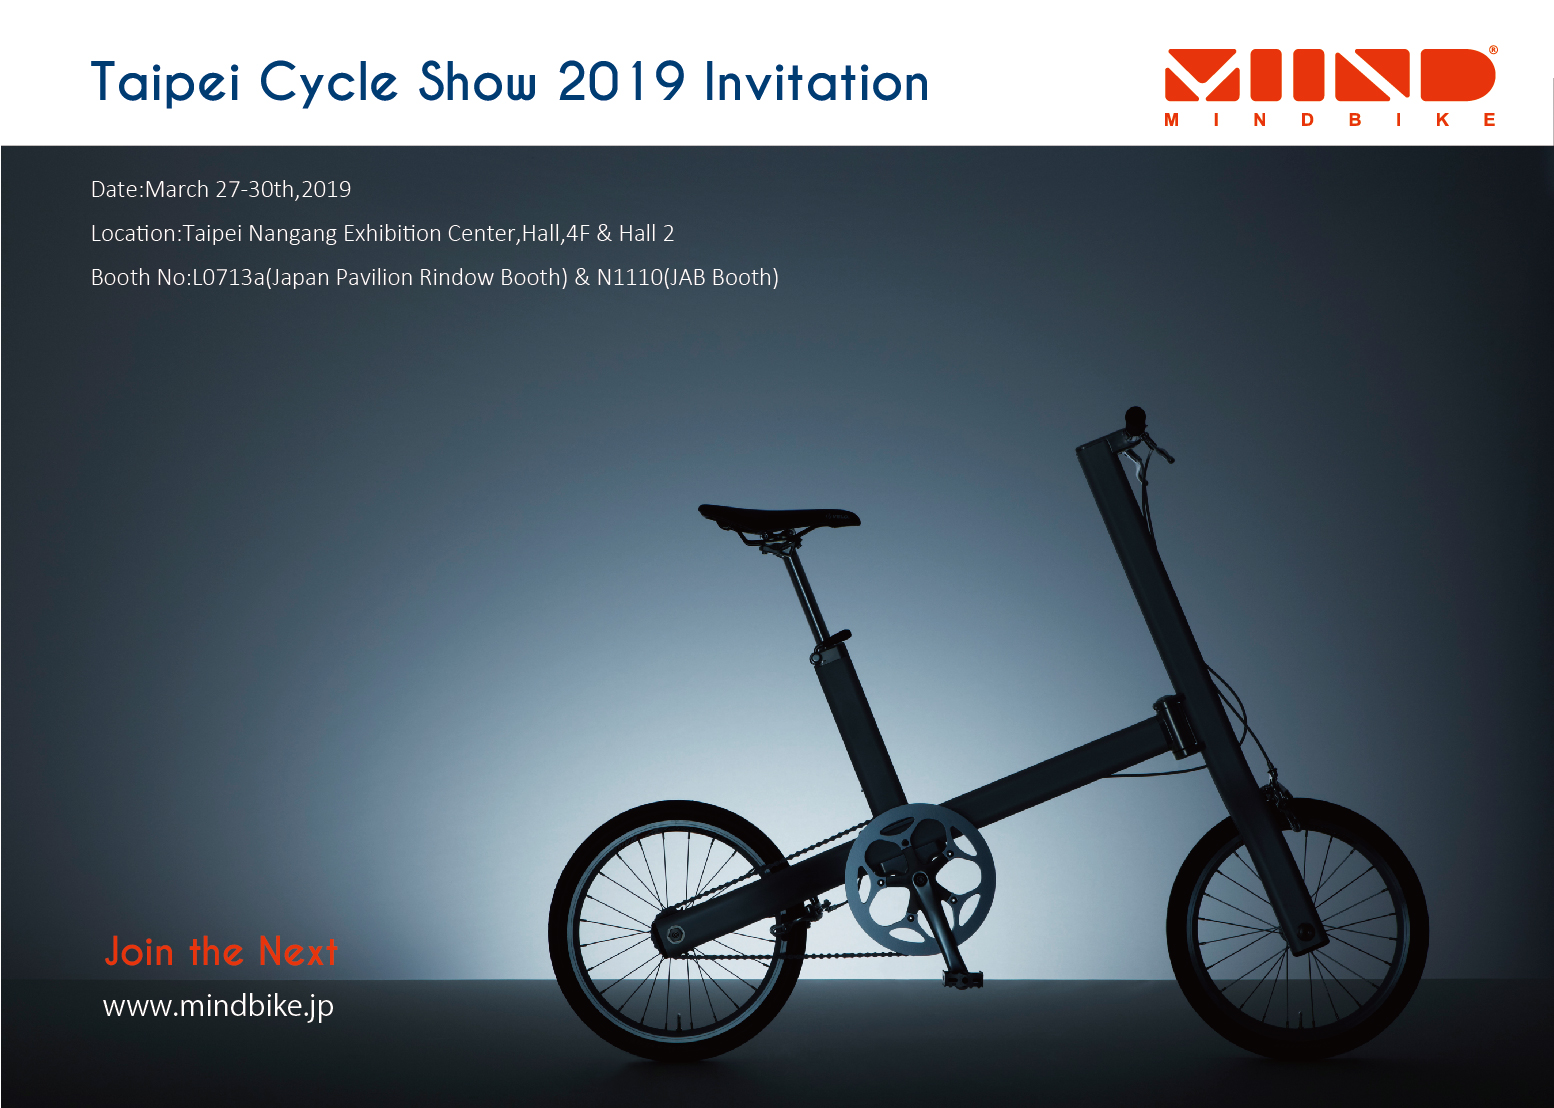 Taipei International Cycle Show 2015